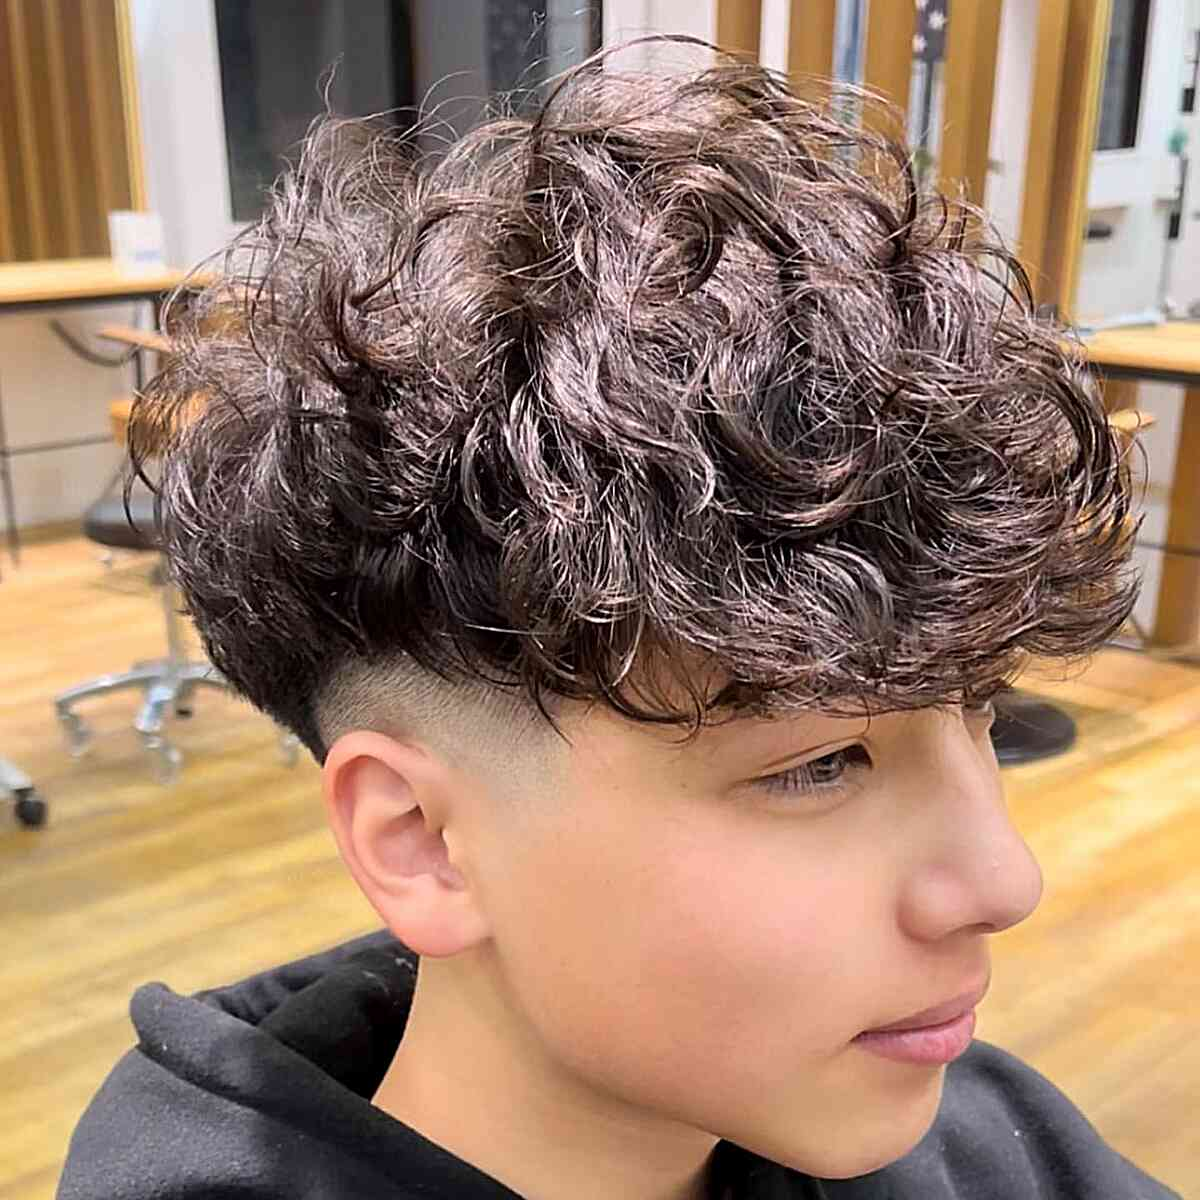 Boys haircut: Picture rocking the curl haircut